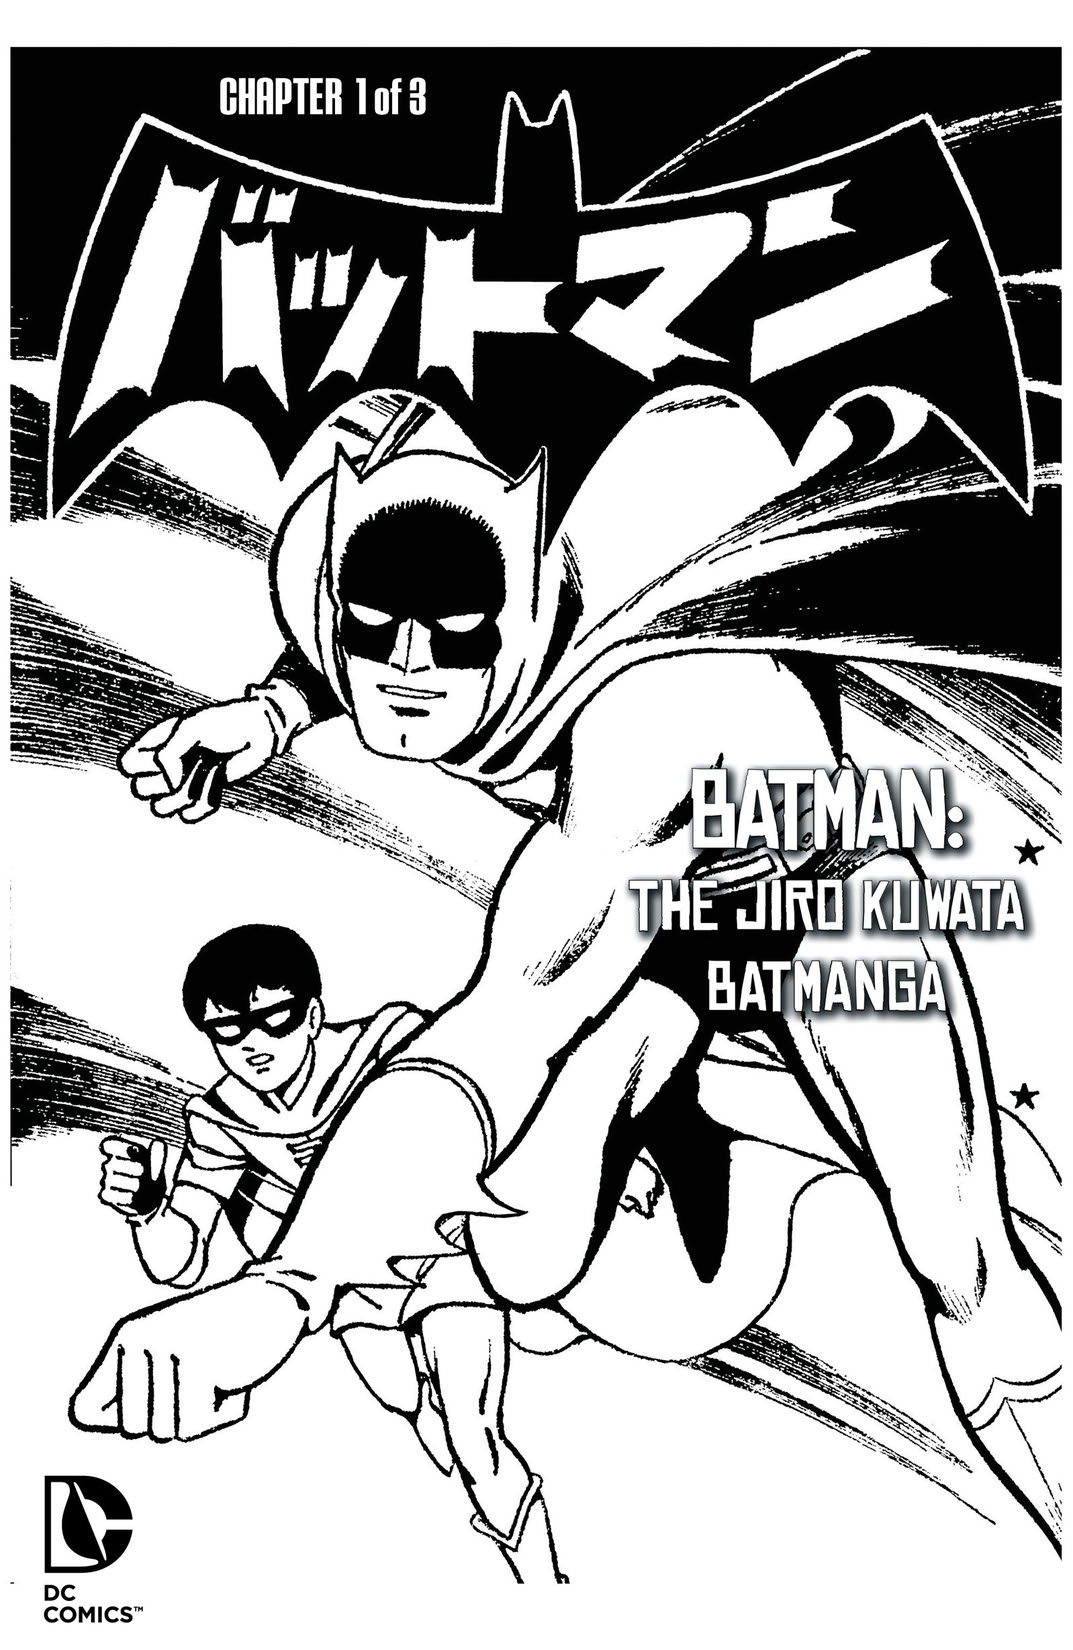 Batman: The Jiro Kuwata Batmanga #28 preview images